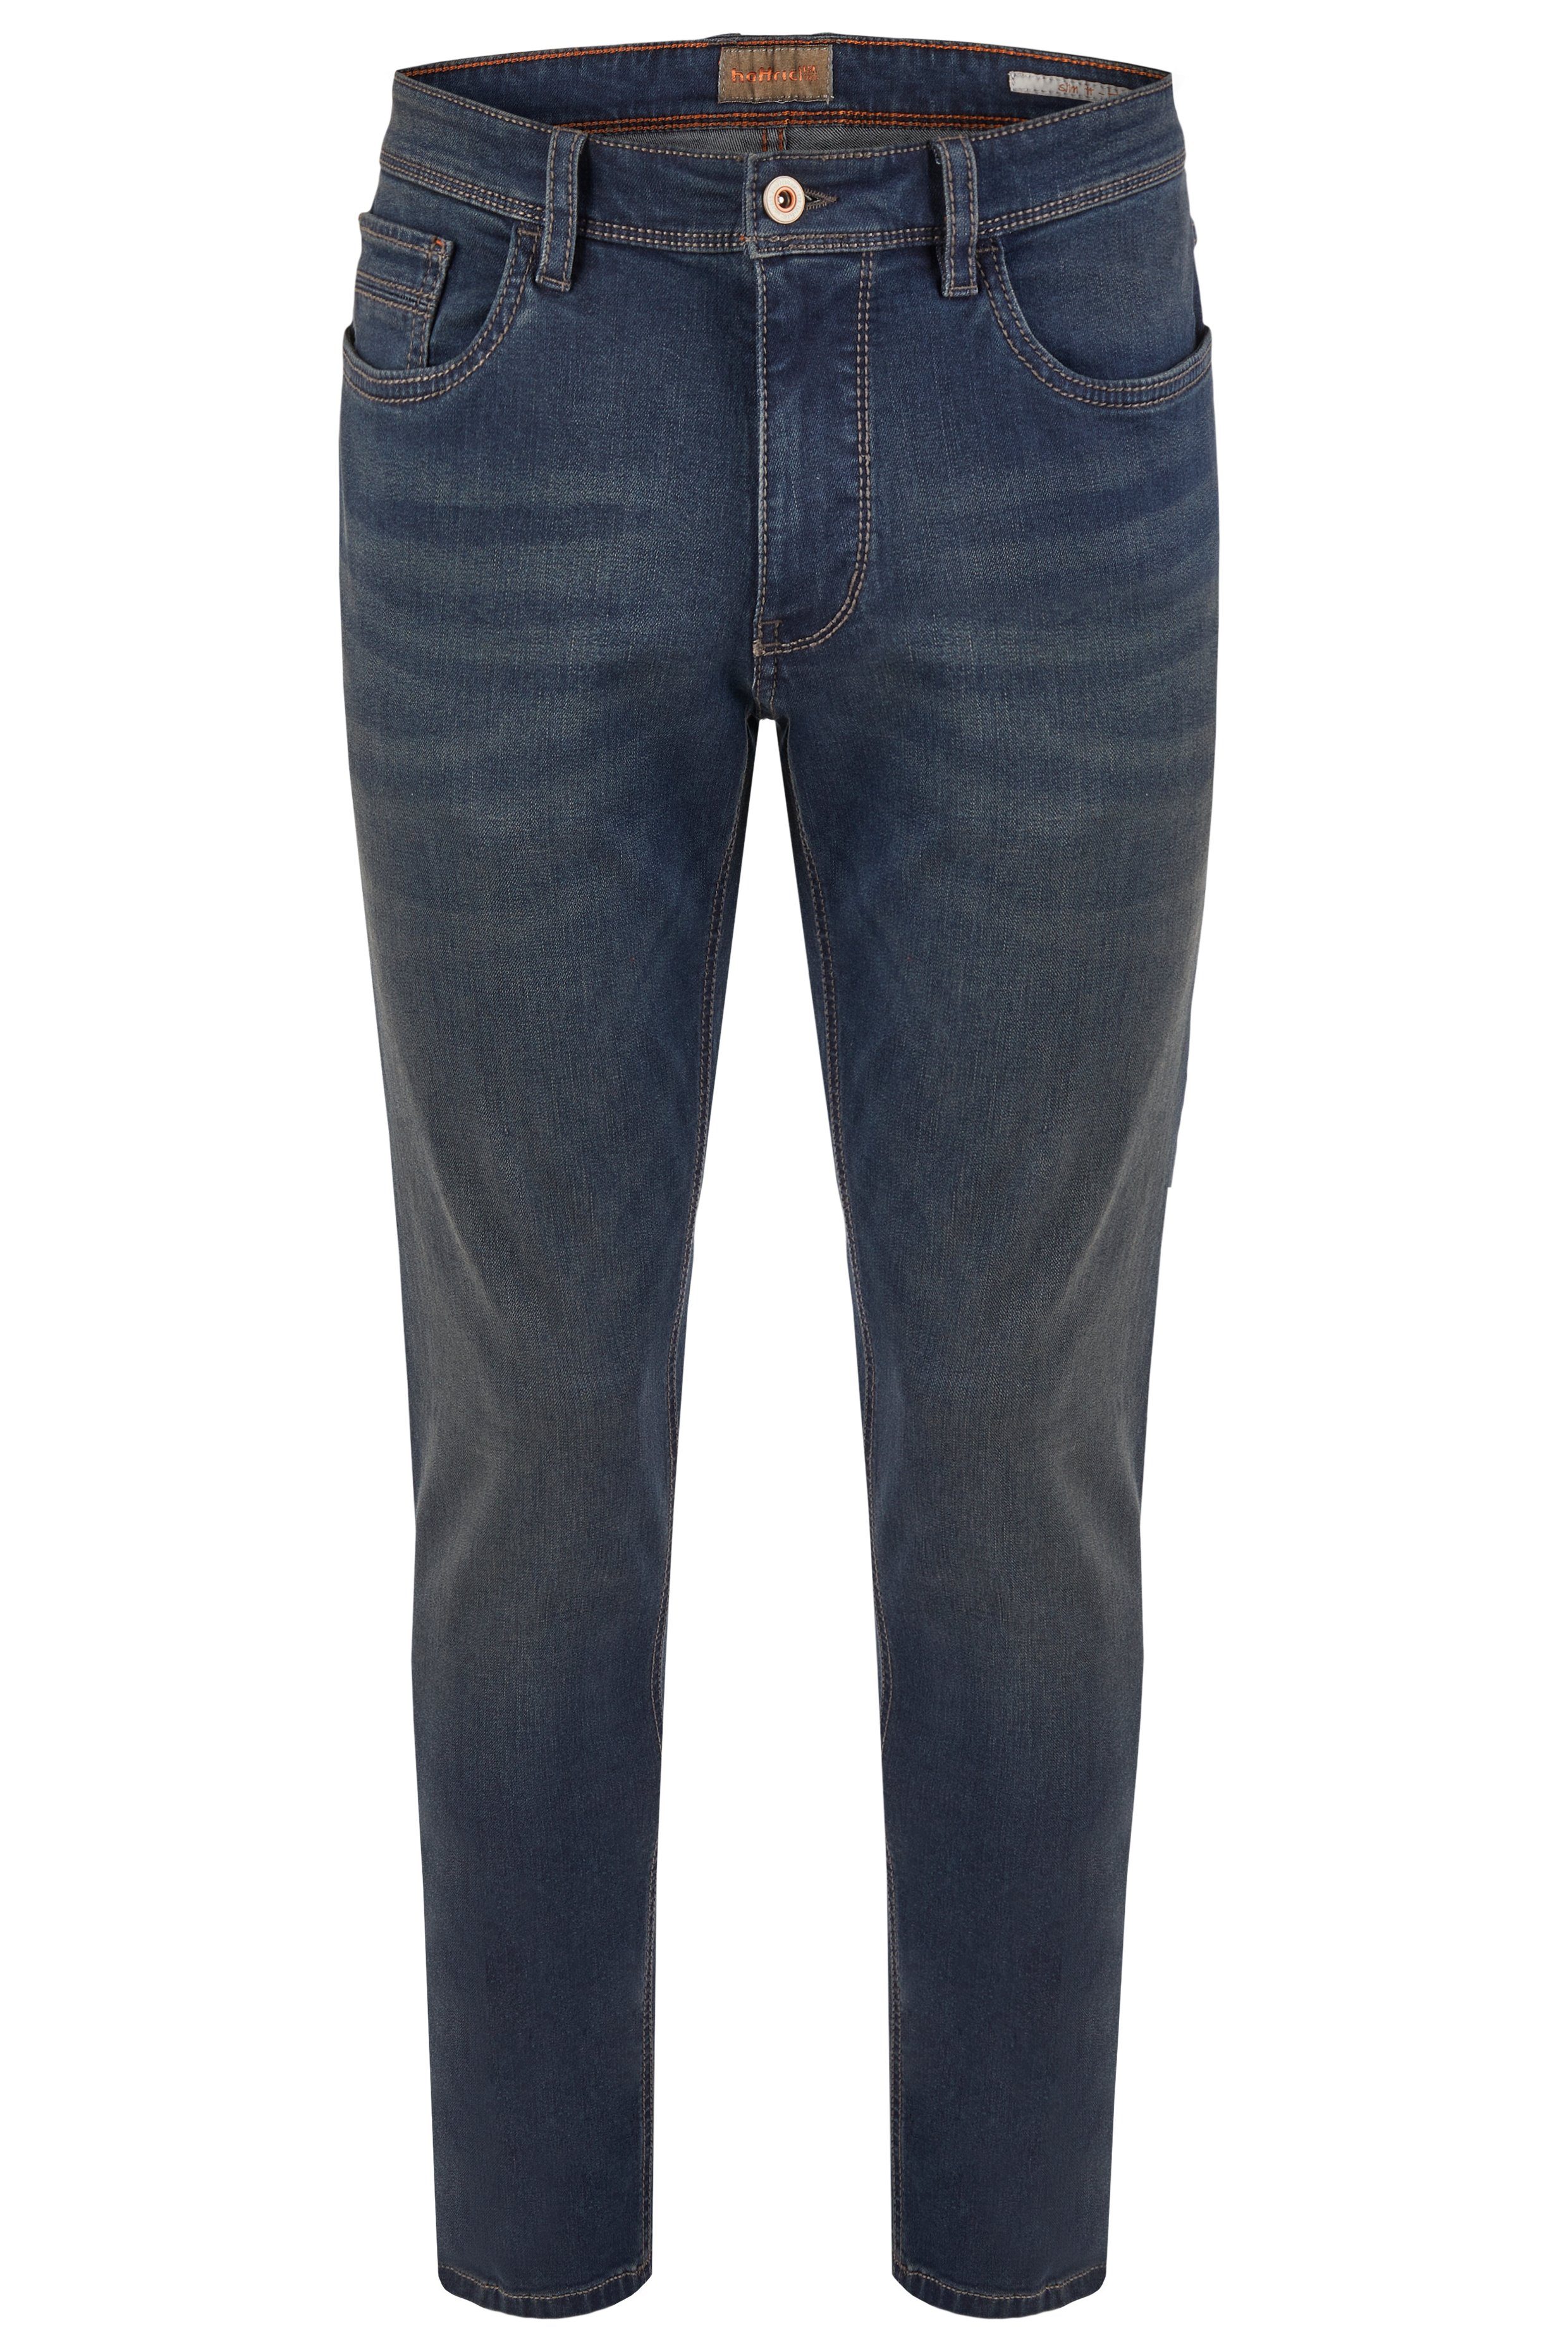 HARRIS 6348.46 Hattric 5-Pocket-Jeans HATTRIC dark 688745 blue